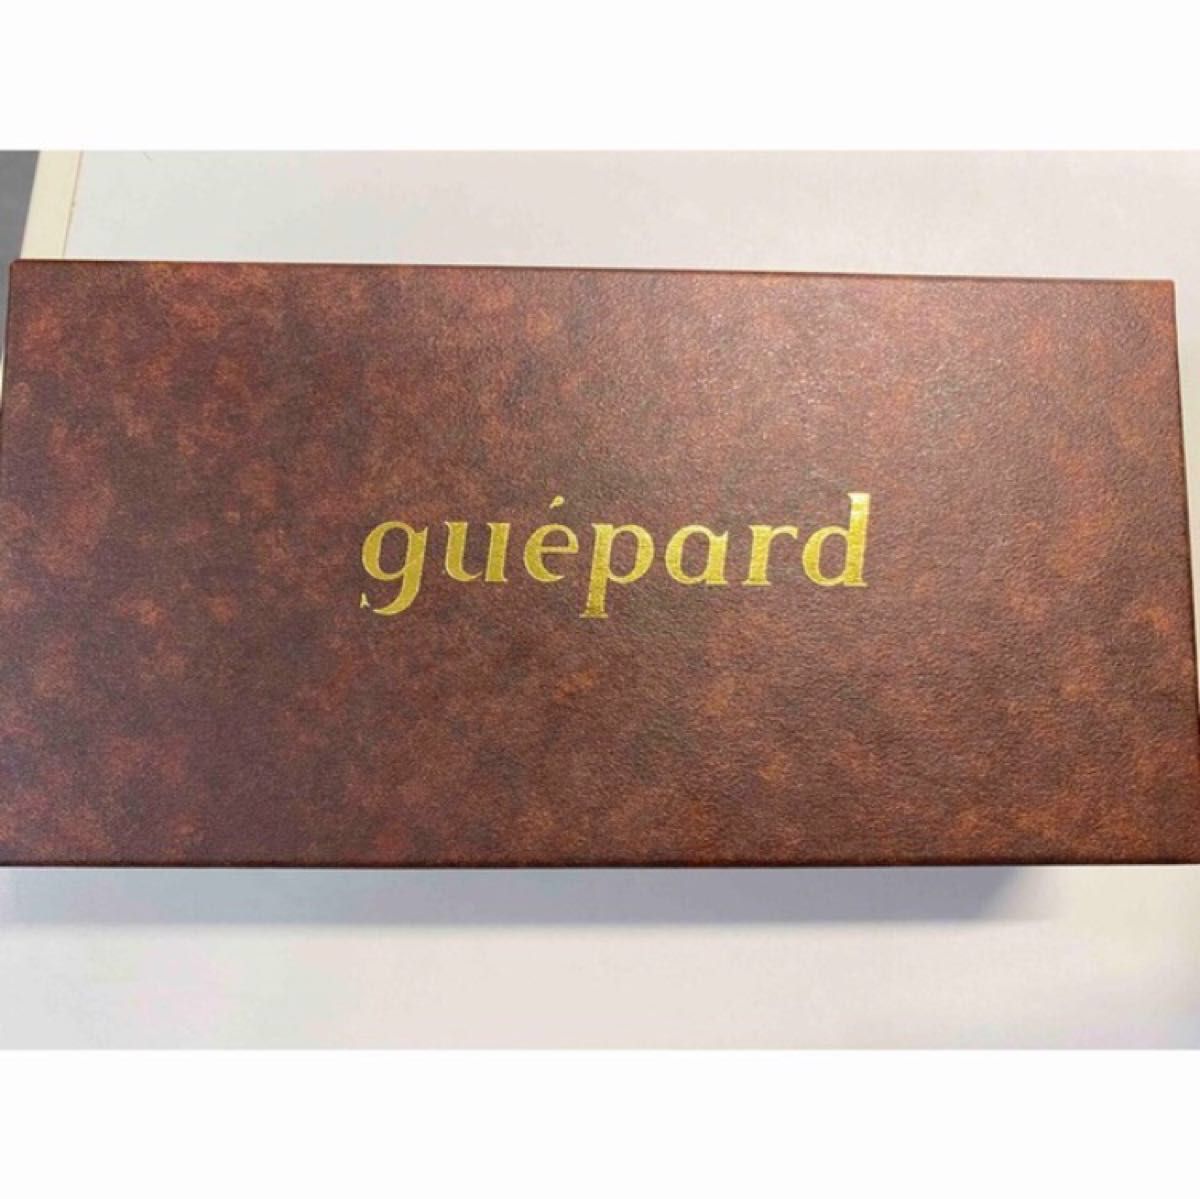 guepard ギュパール gp-15 クラウンパント  メガネ 眼鏡 ヴィンテージ メガネフレーム 太セル ブラックカラー